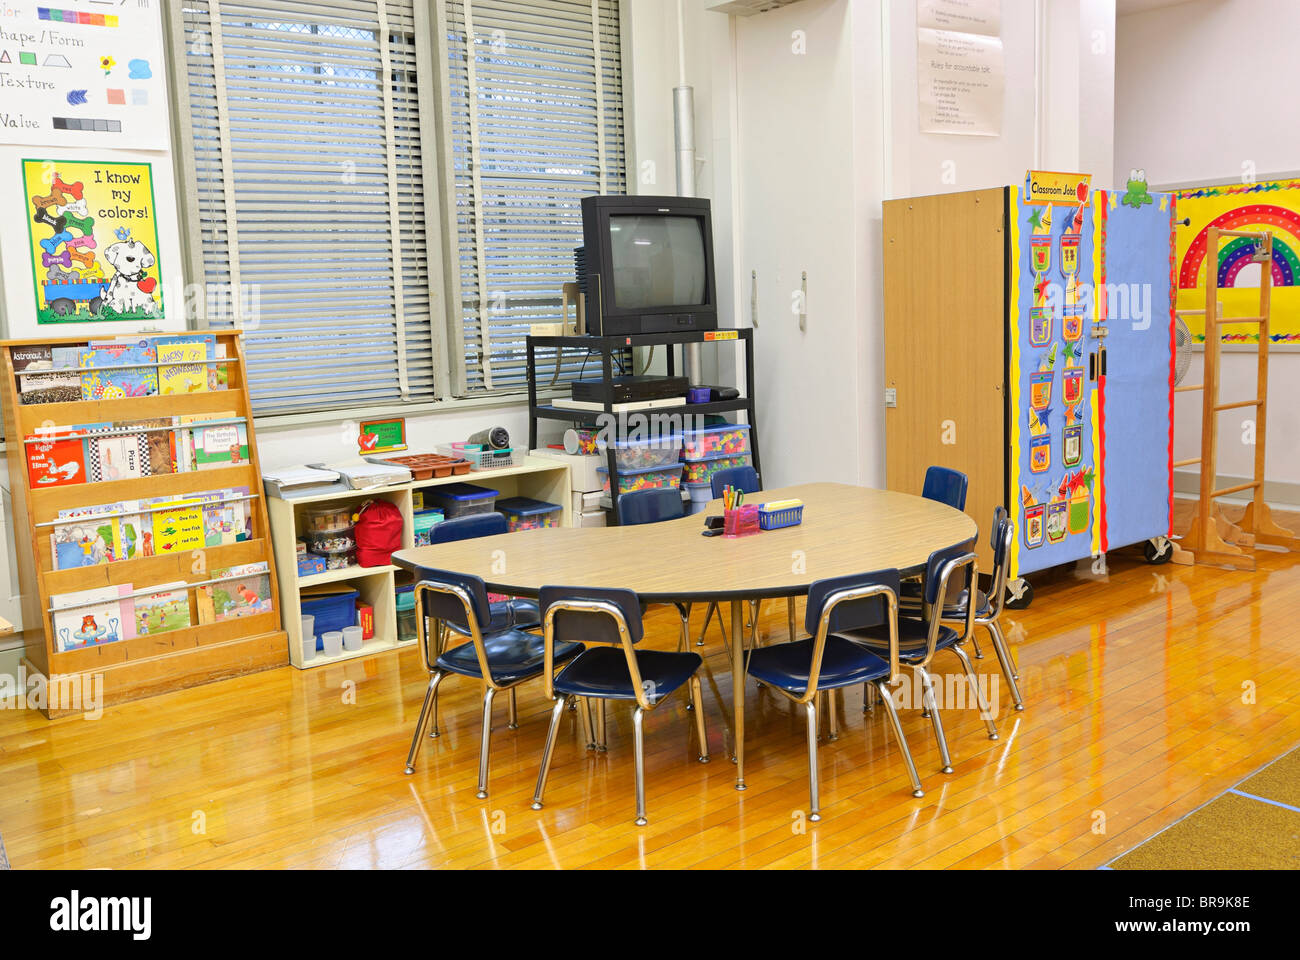 Kindergarten and First Grade classroom. Stock Photo